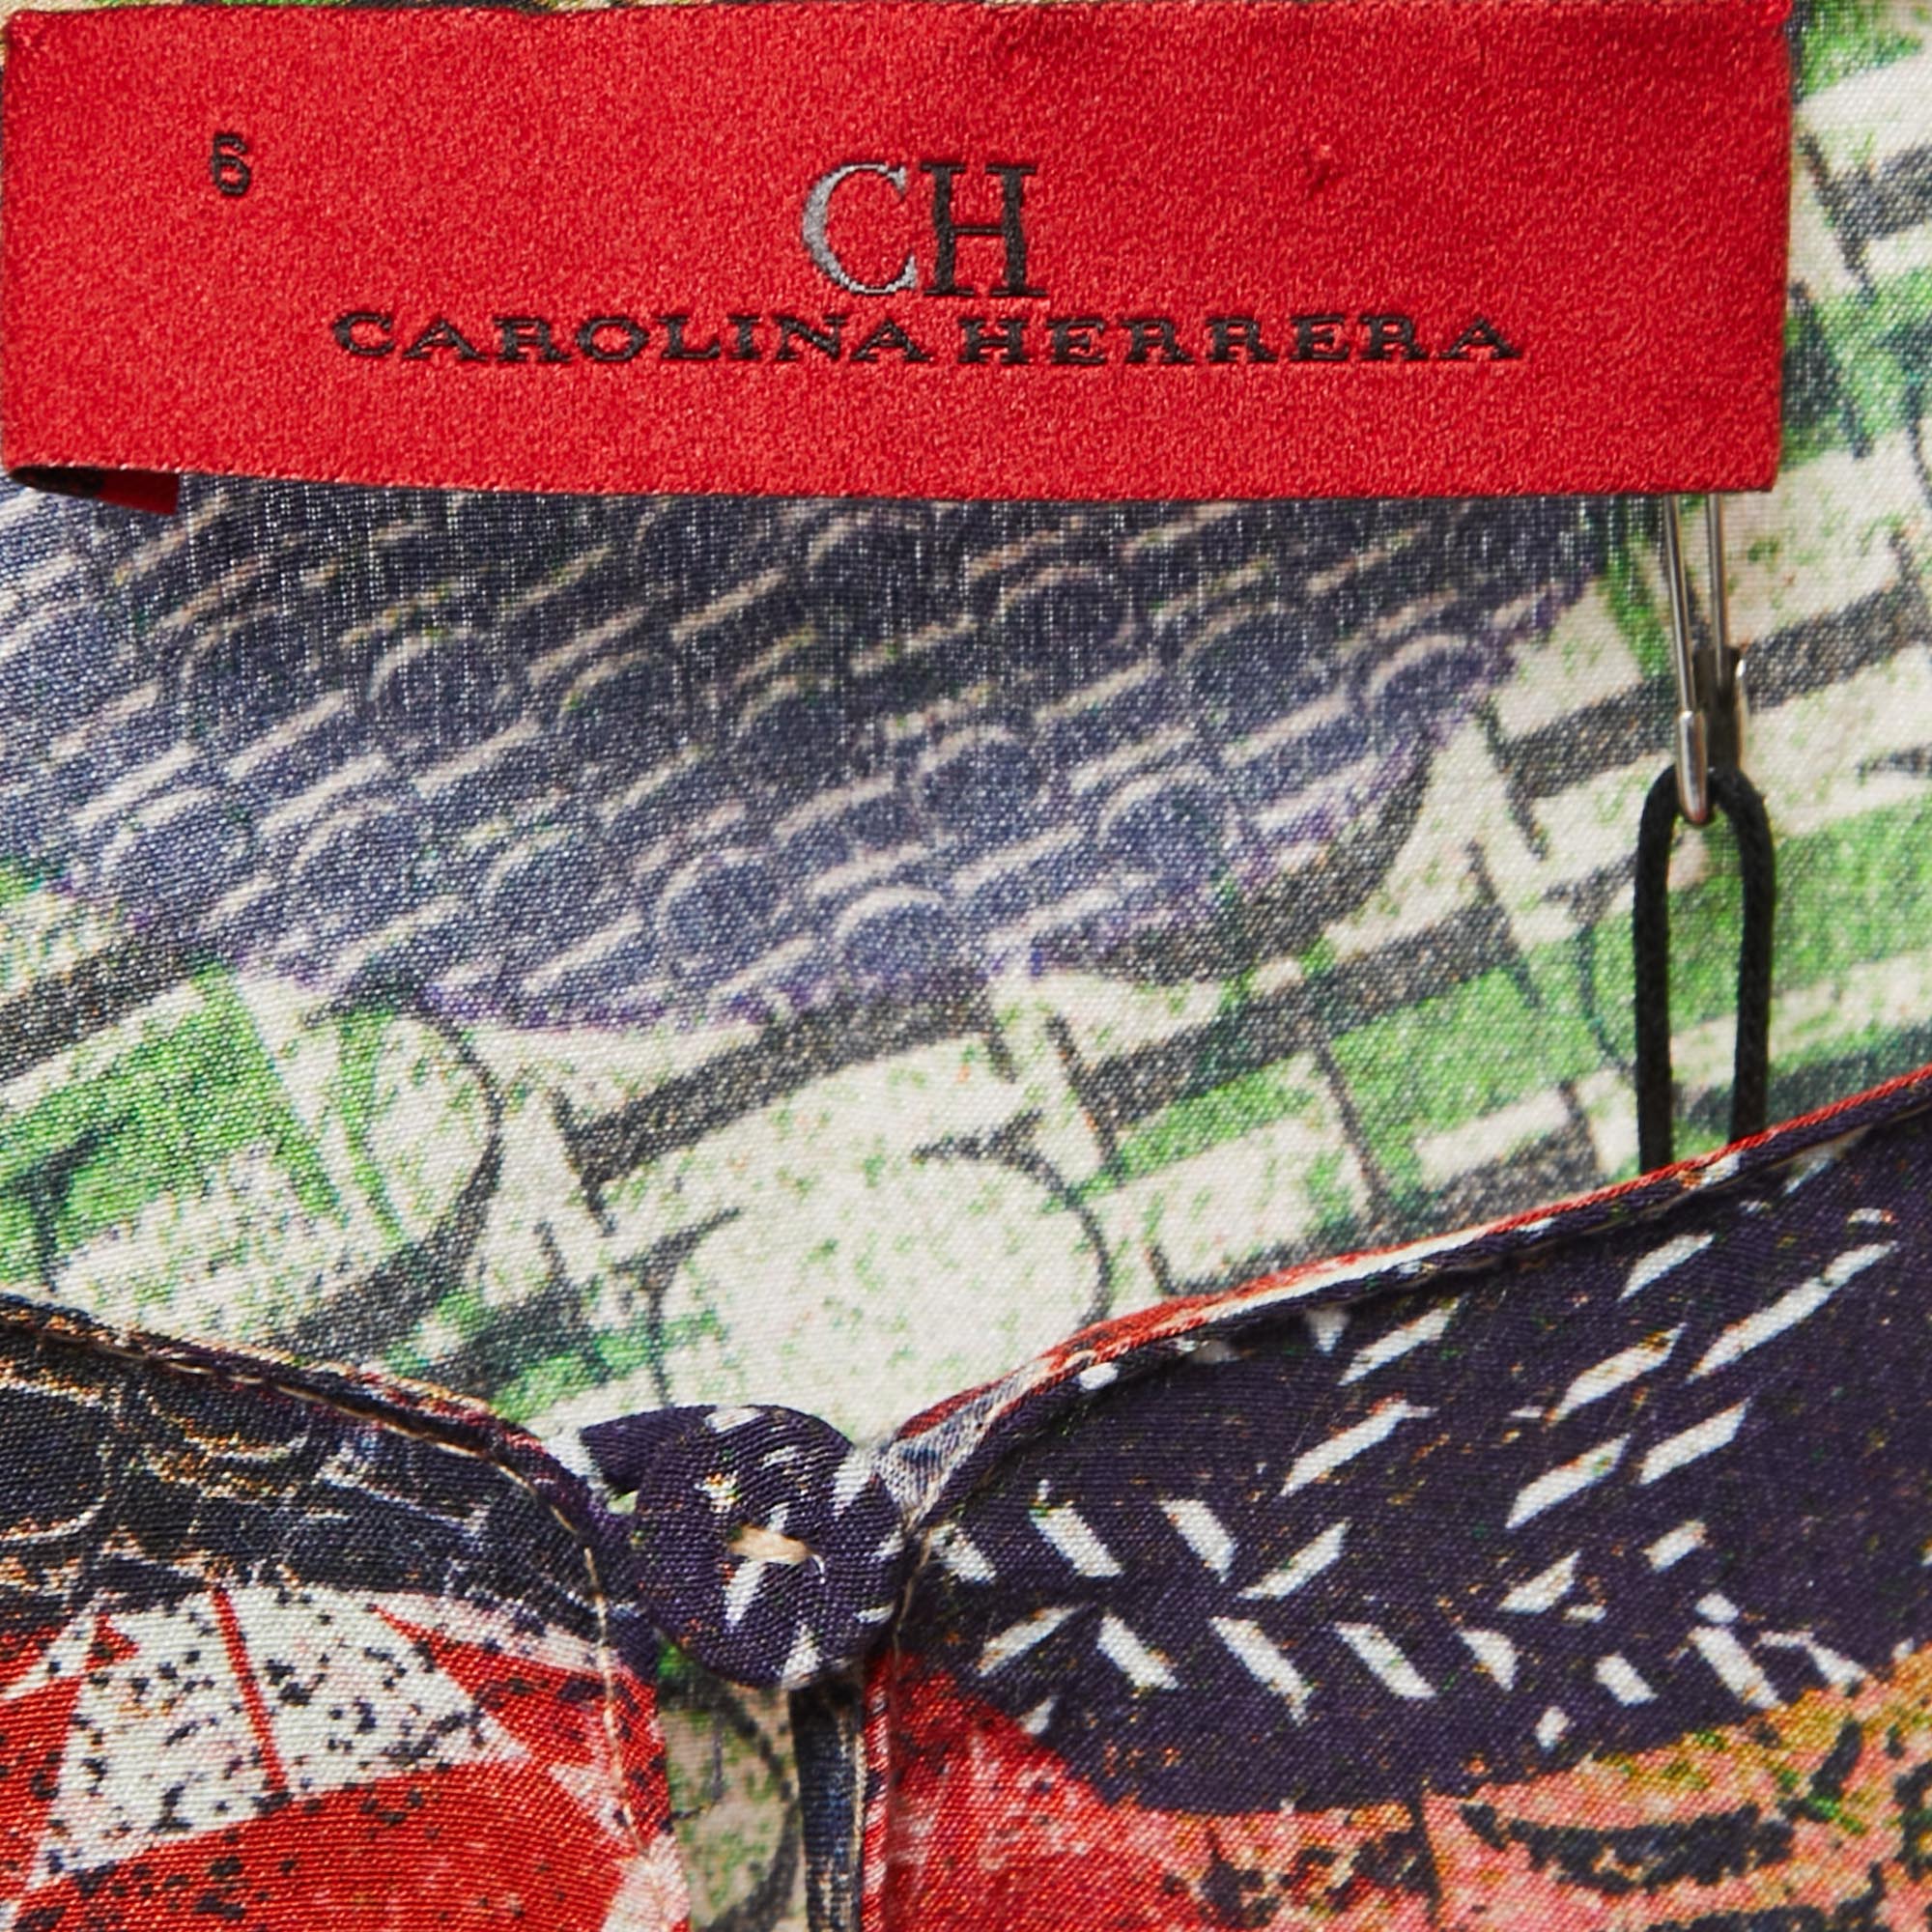 CH Carolina Herrera Multicolor Printed Silk Blouse M